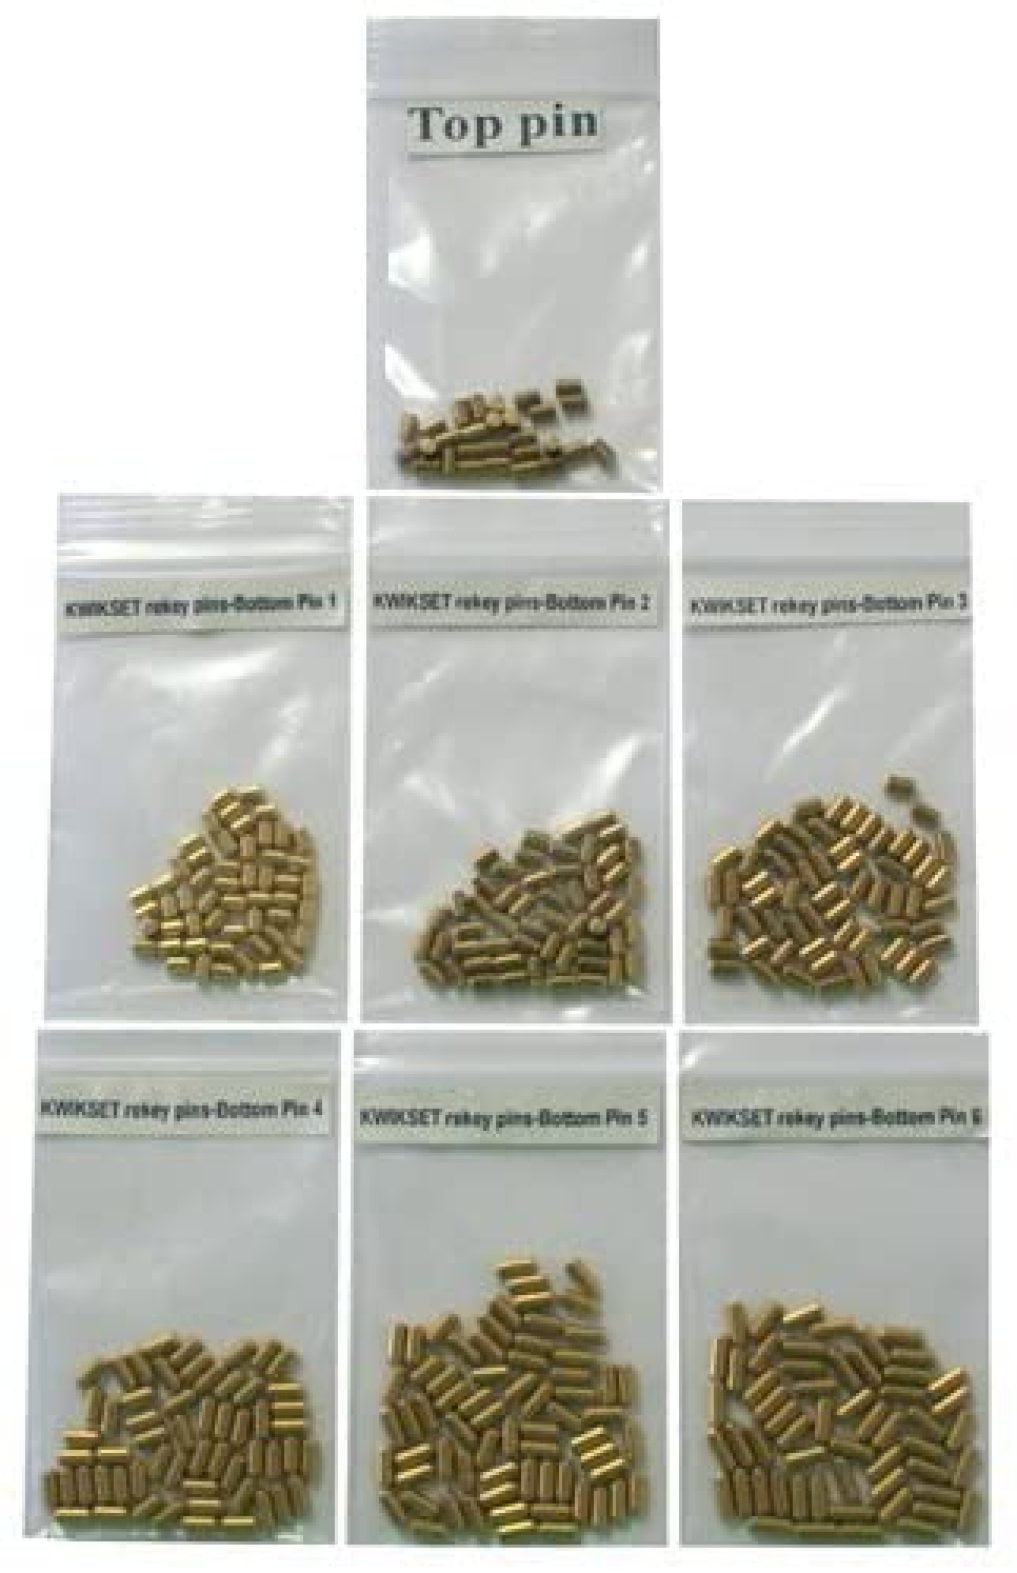 100 Pieces PC Schlage Rekey Bottom Pins #8 Locksmith Rekeying Pin Key Kits 